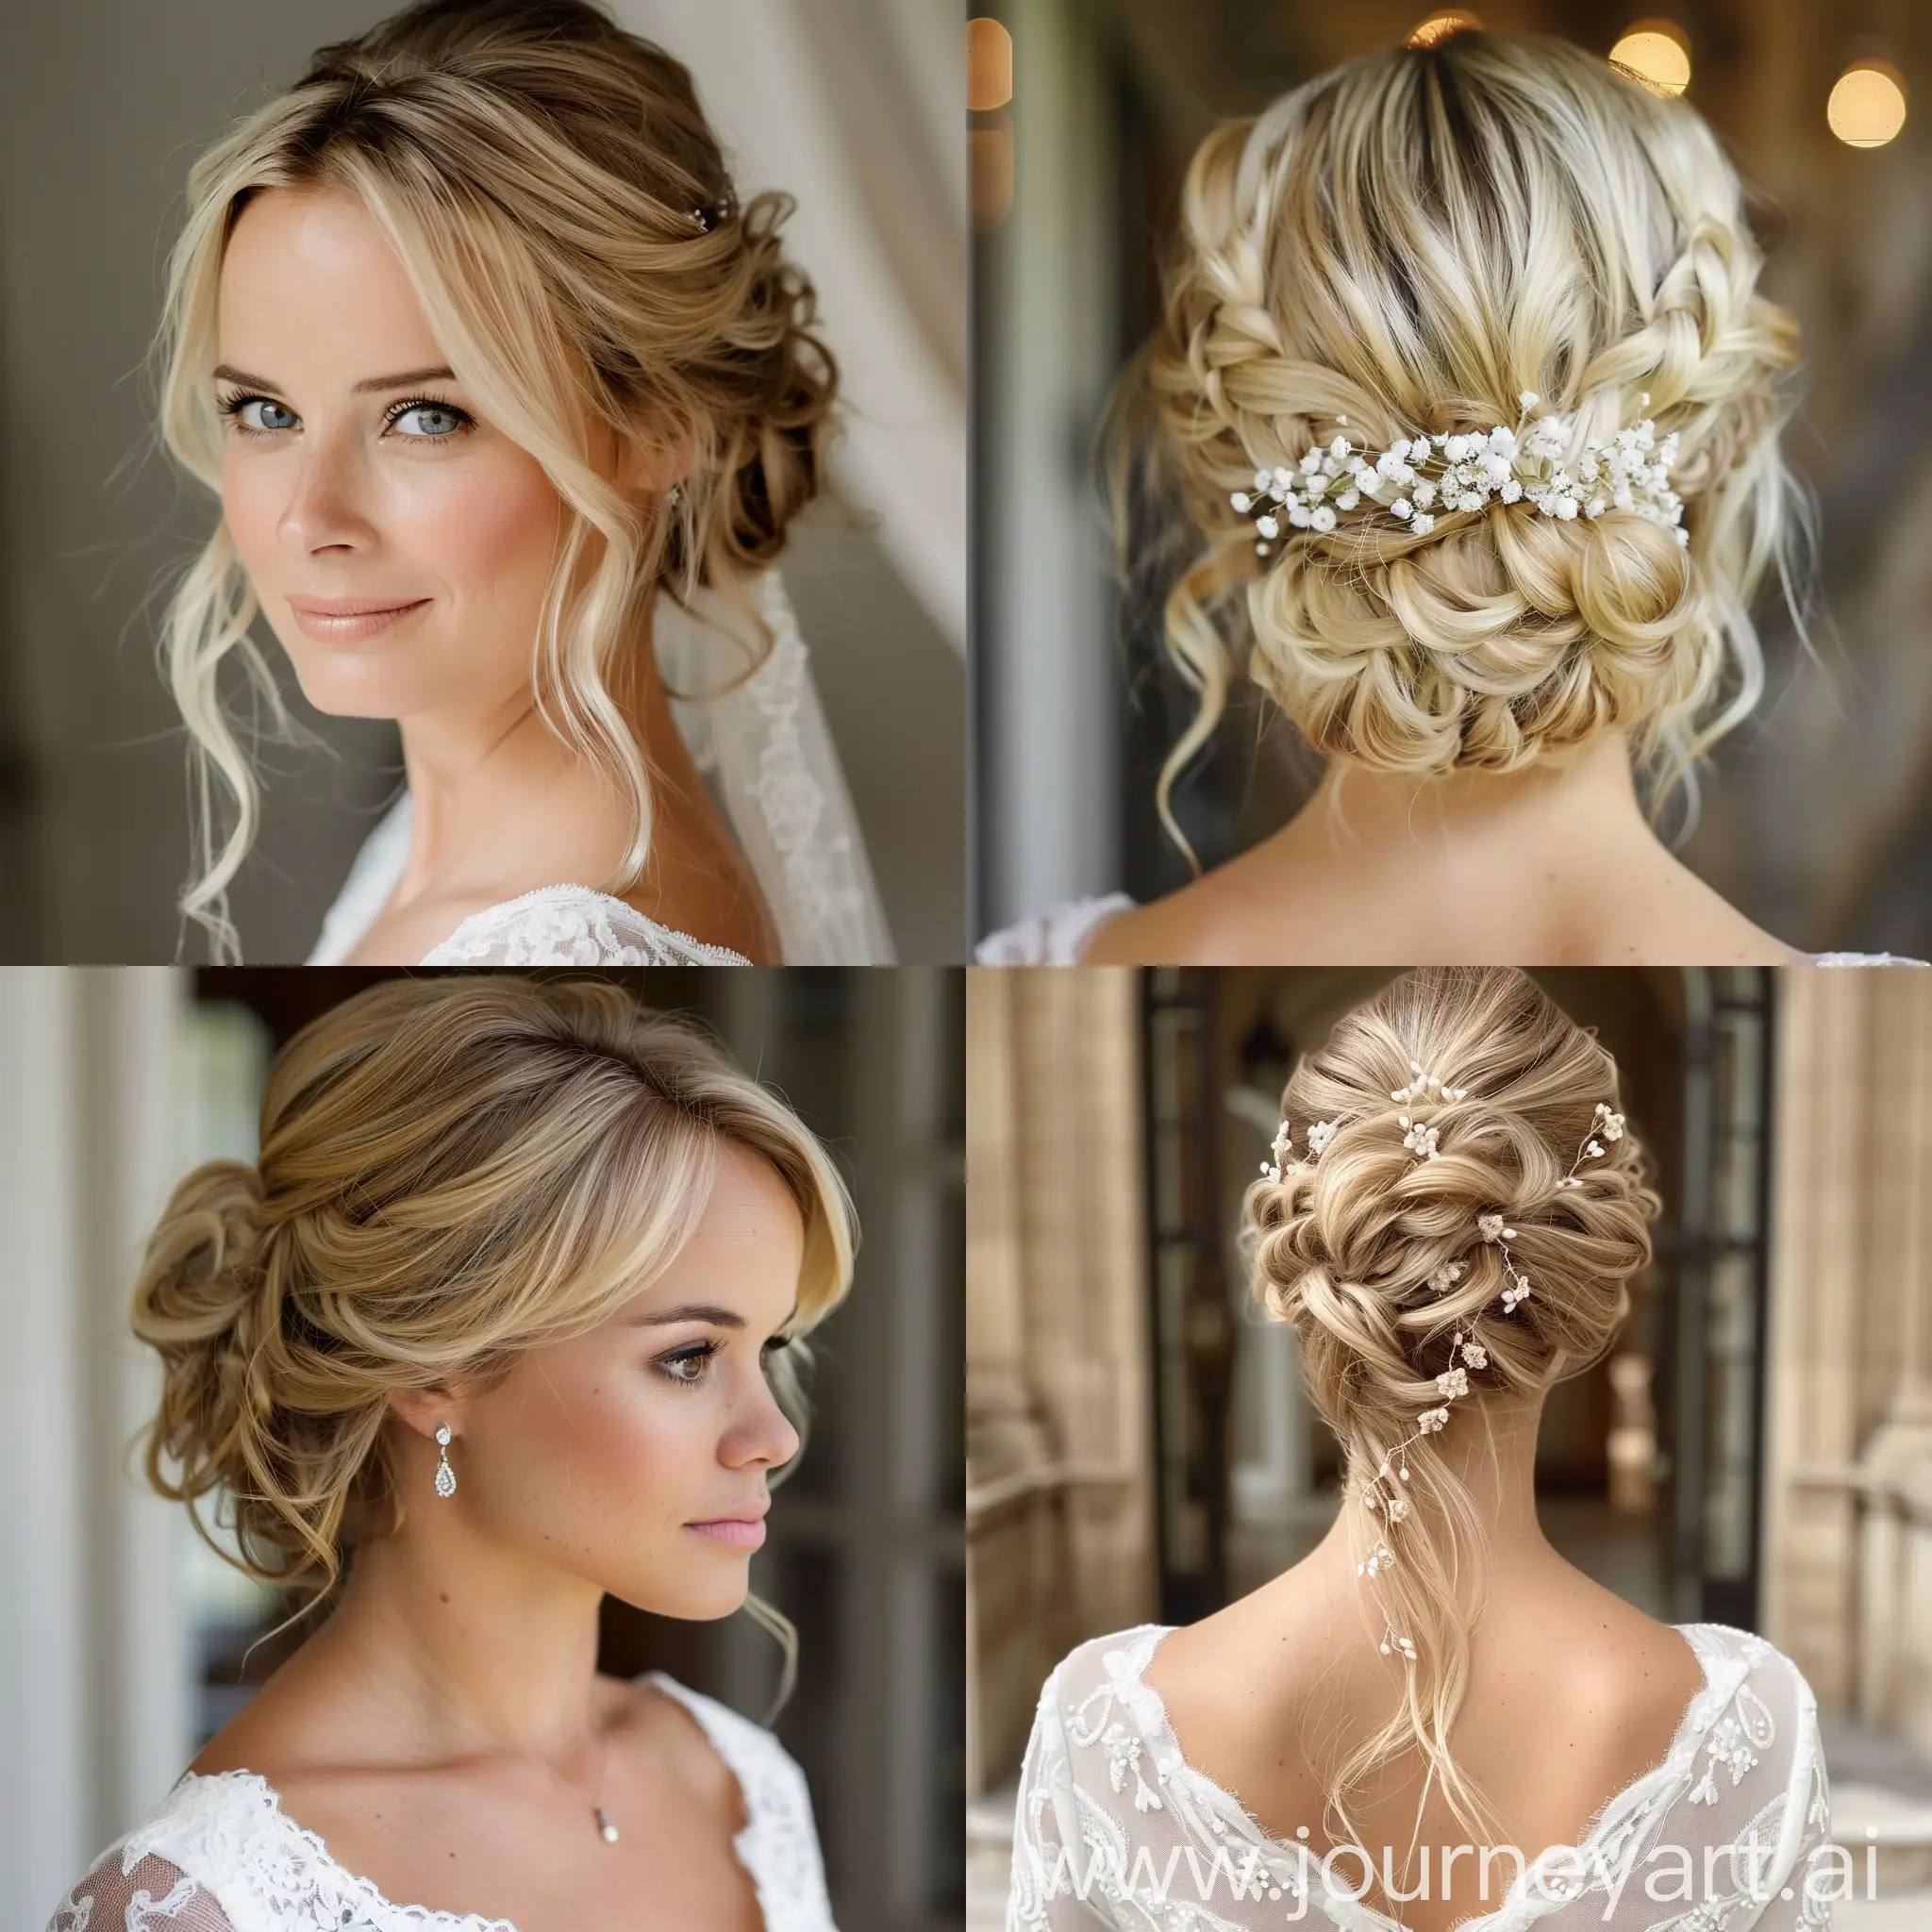 Blonde-Bride-with-Elaborate-Wedding-Hairstyle